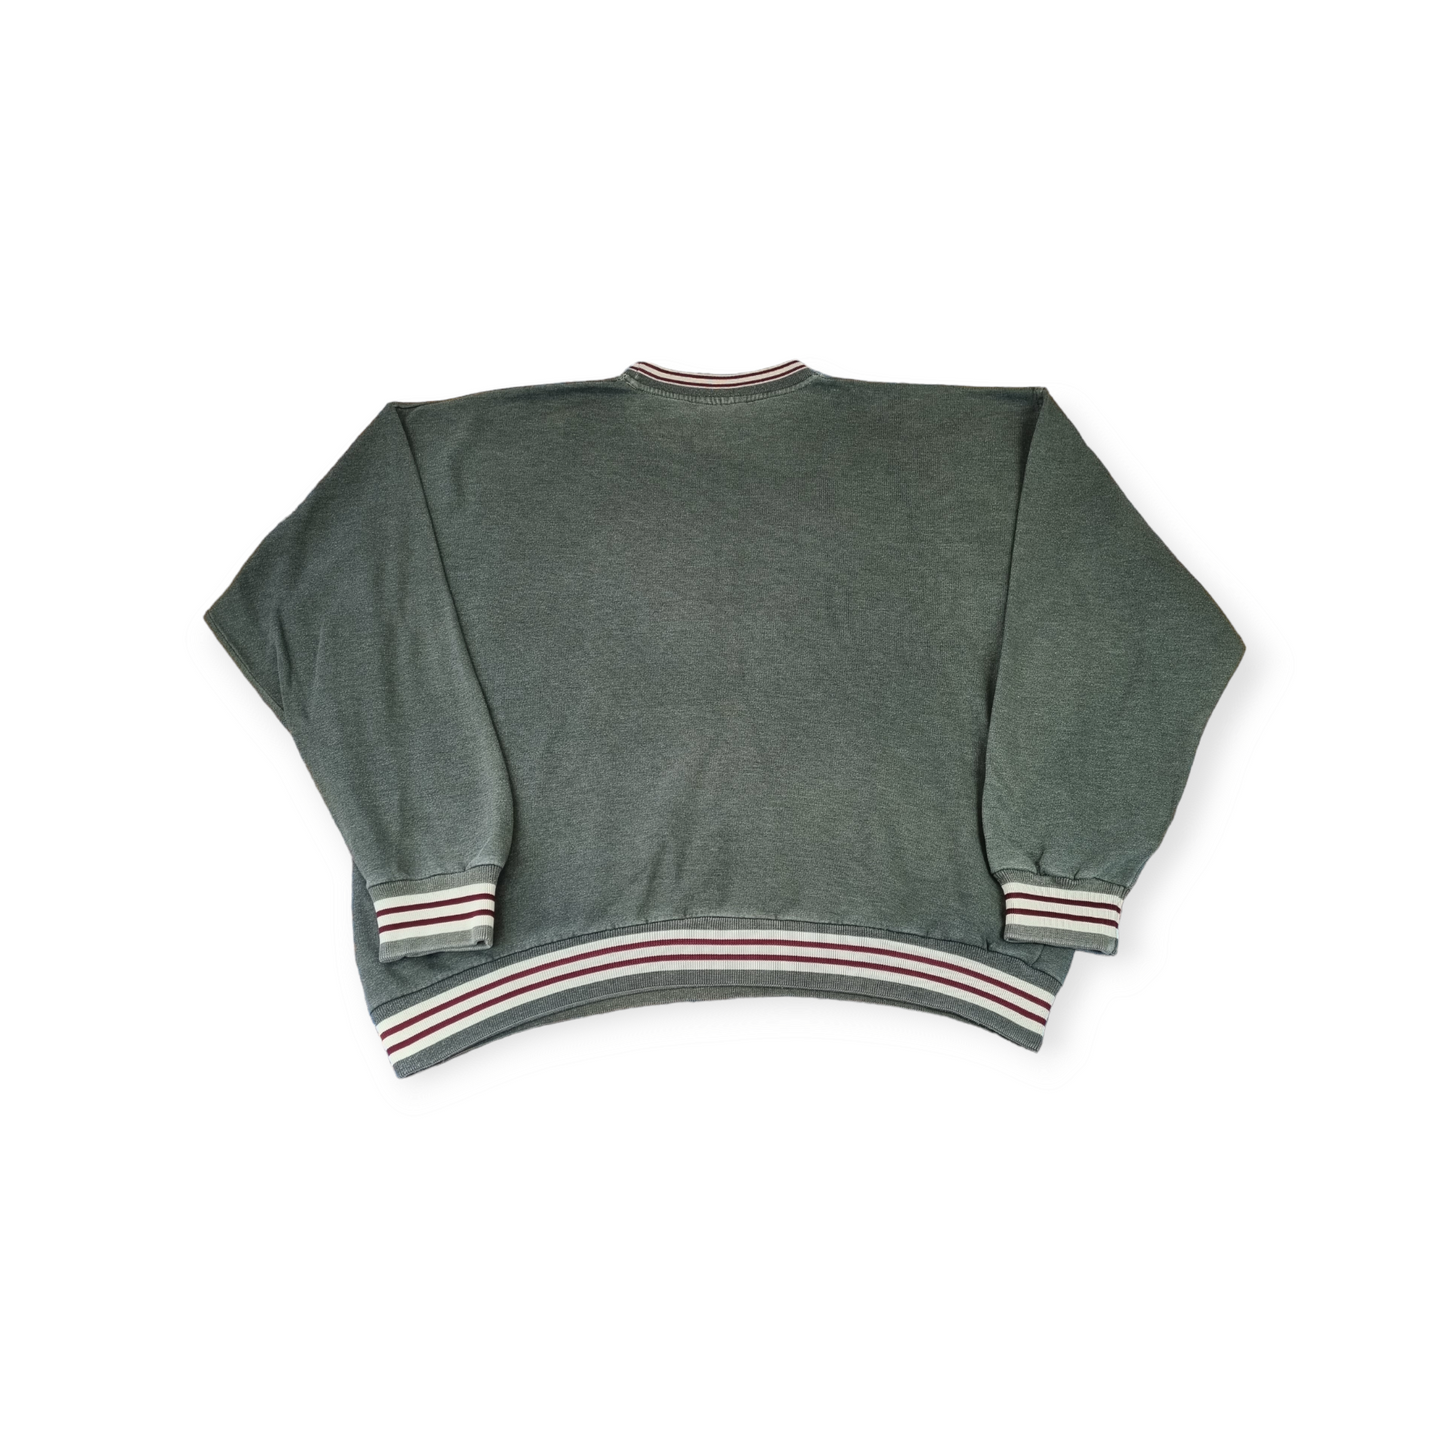 Vintage Reebok Sweatshirt (XL)